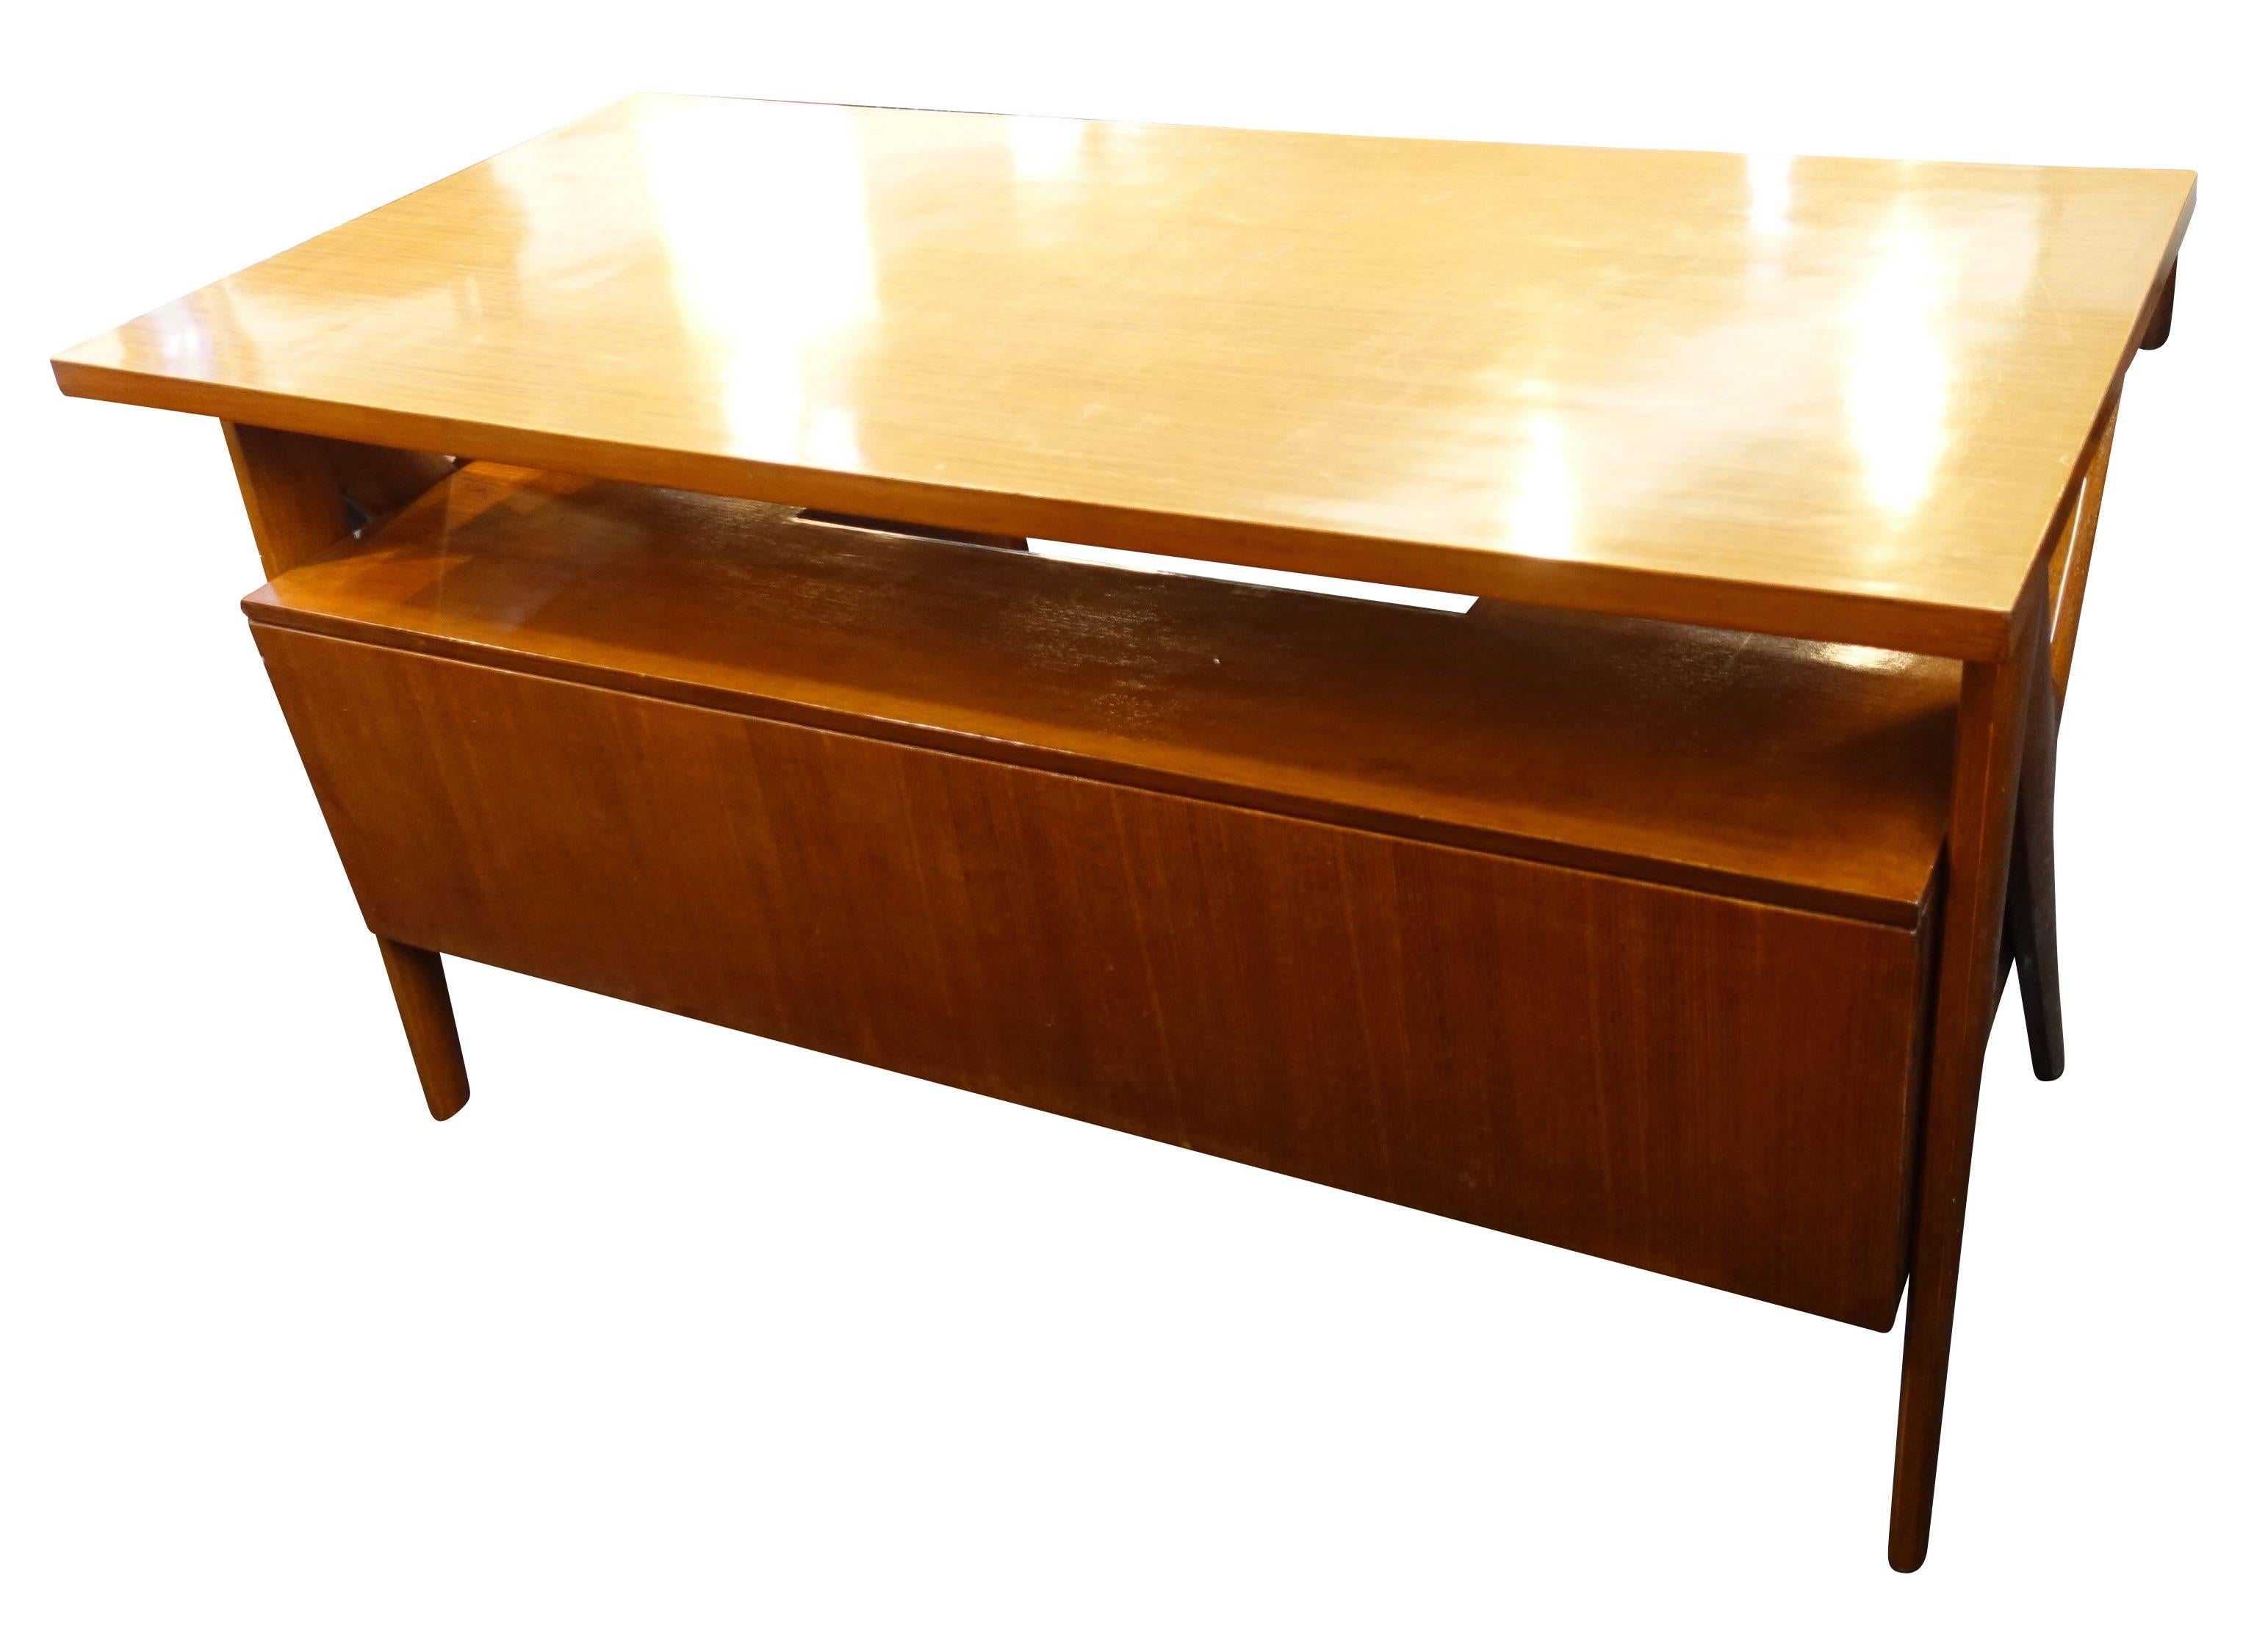 Midcentury Italian Ico Parisi designed six-drawer desk.
Trademark side design. 
Floating top.
 